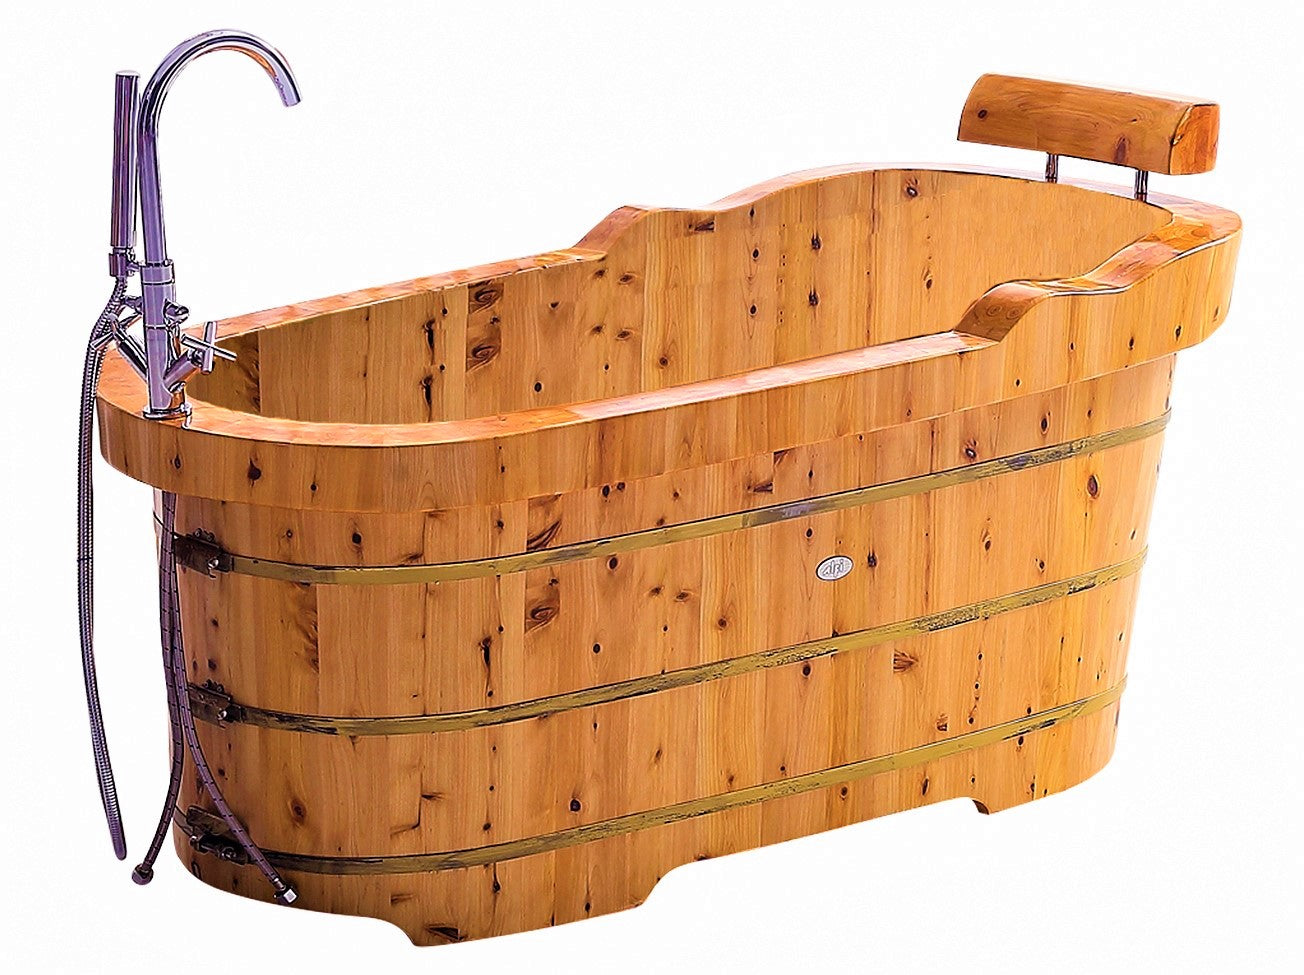 ALFI AB1139 Bathtub Free Standing Cedar Wooden with Fixtures & Headrest (61-inch)